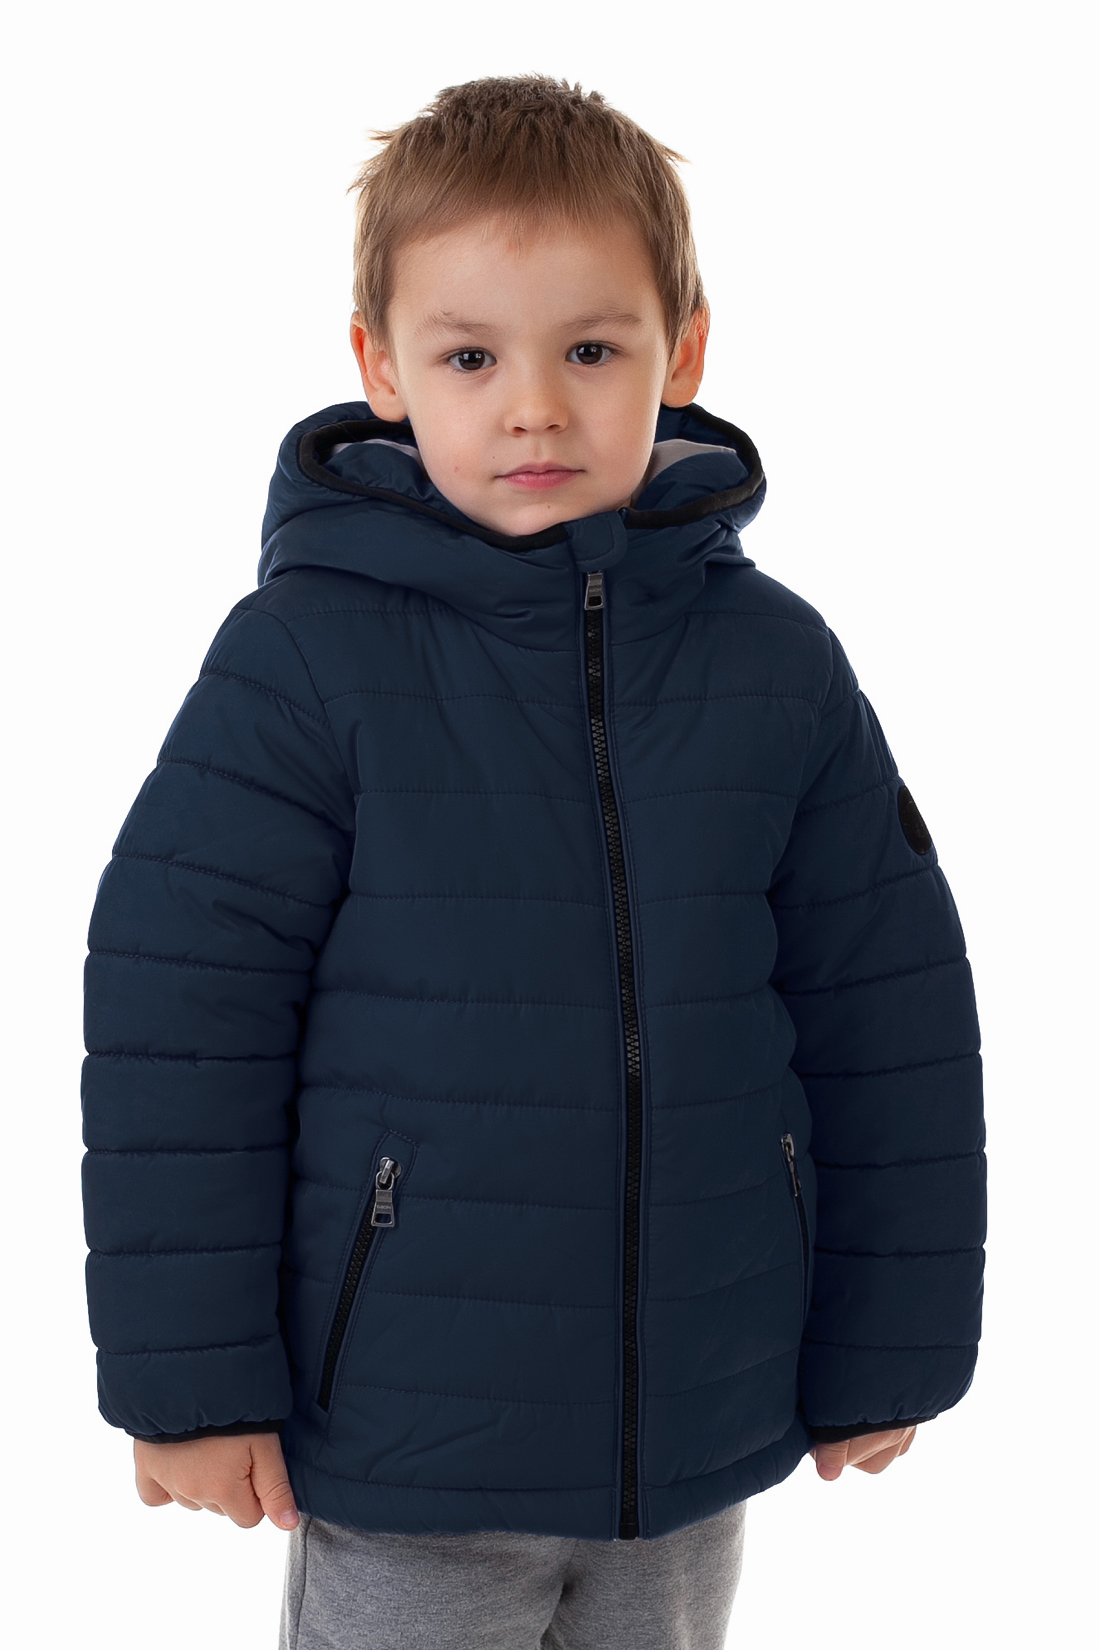 Куртка для мальчика (арт. baon BK538505), размер 110-116, цвет синий Куртка для мальчика (арт. baon BK538505) - фото 1